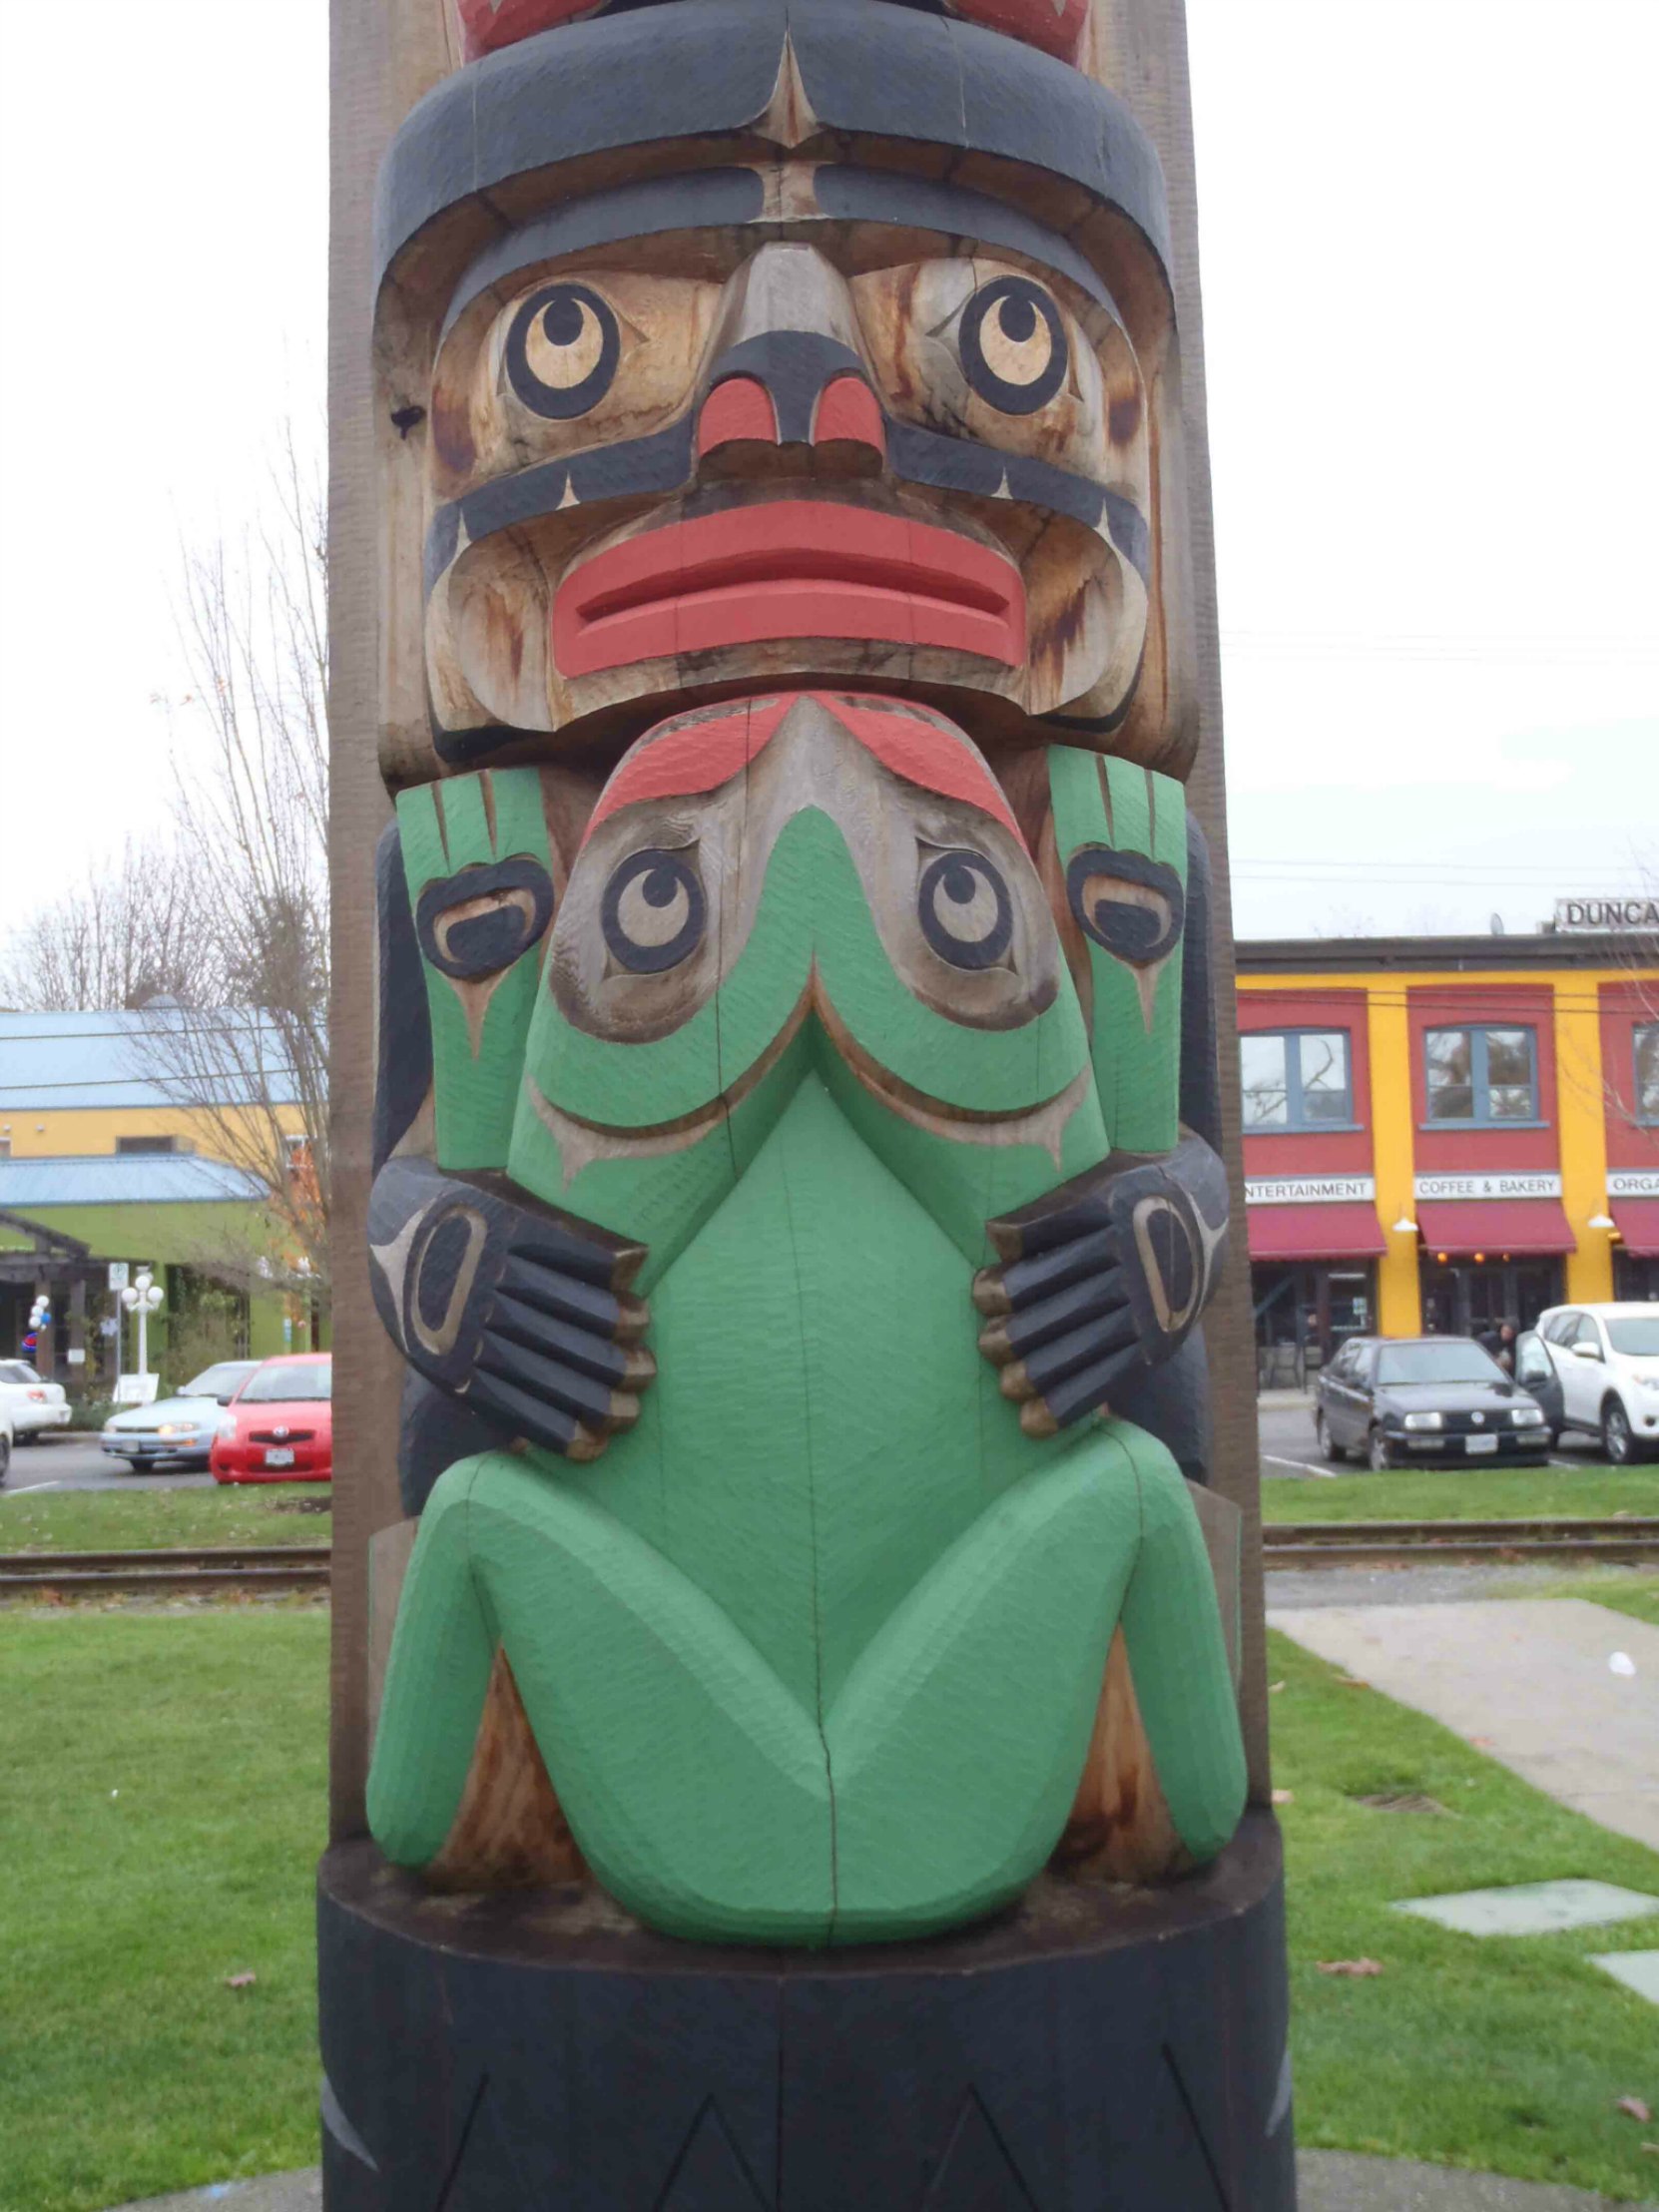 Centennial Pole, Frog Figure, Charles Hoey Park, Duncan, B.C.